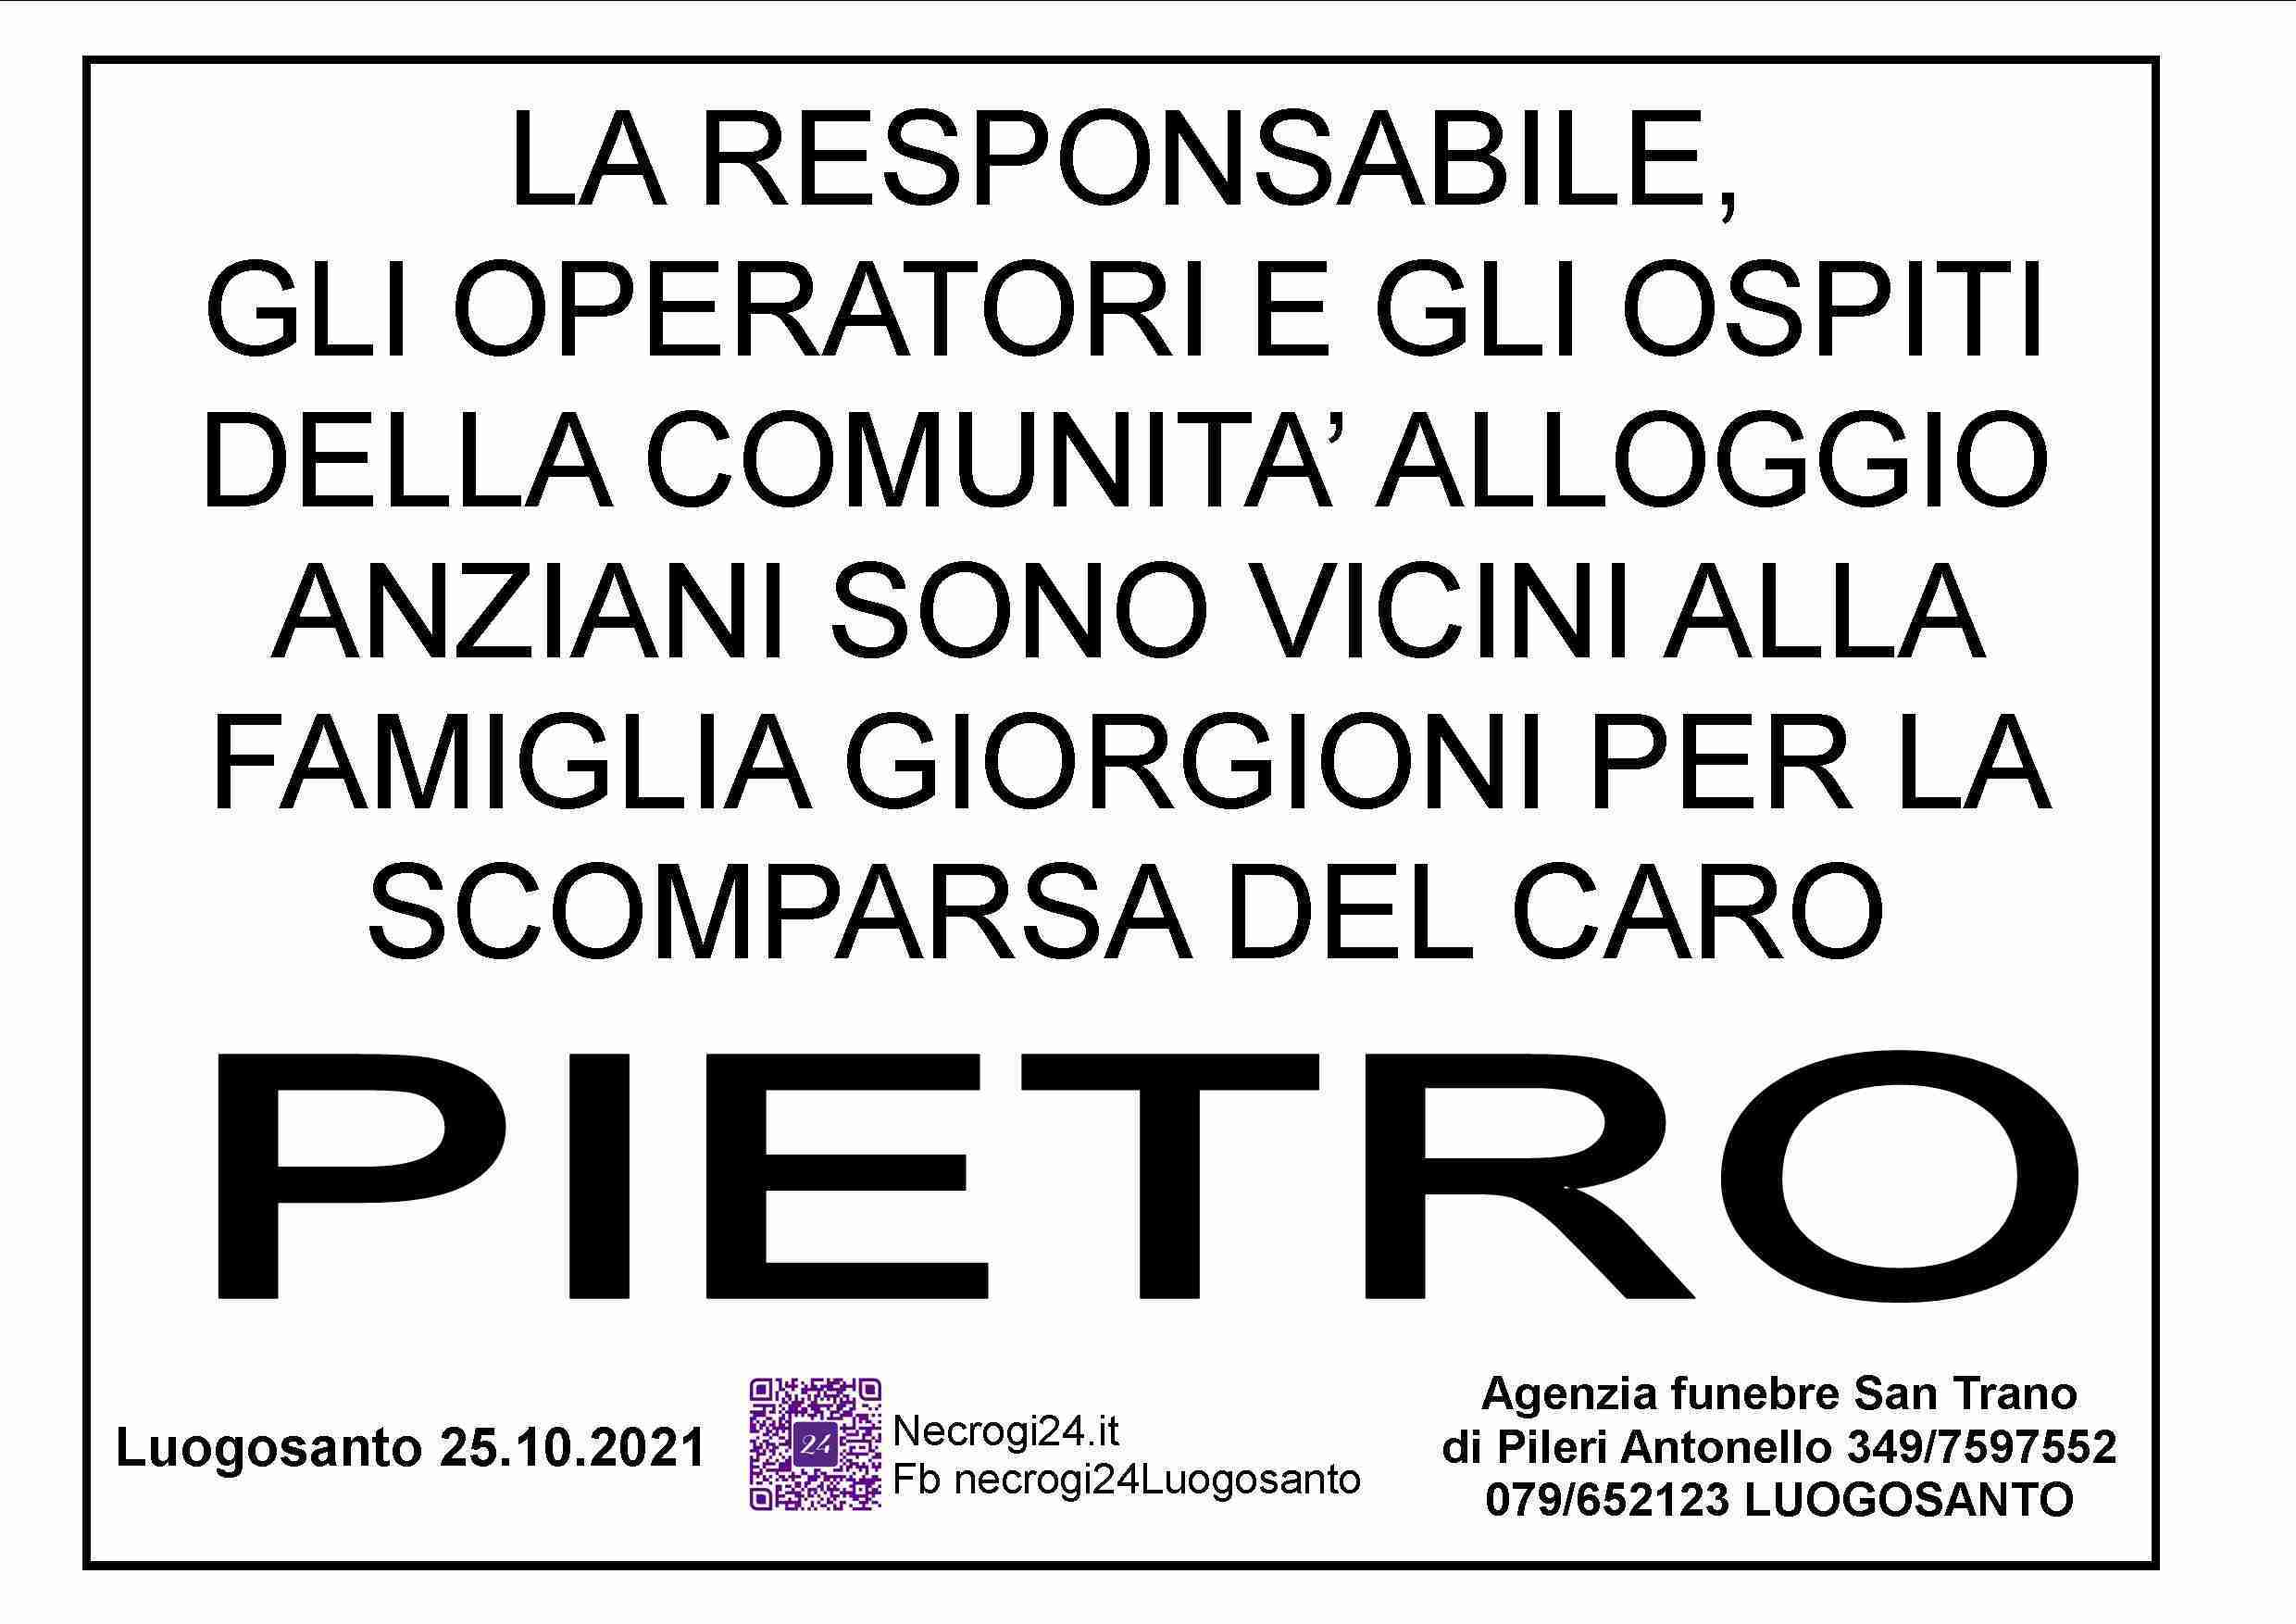 Pietro Giorgioni